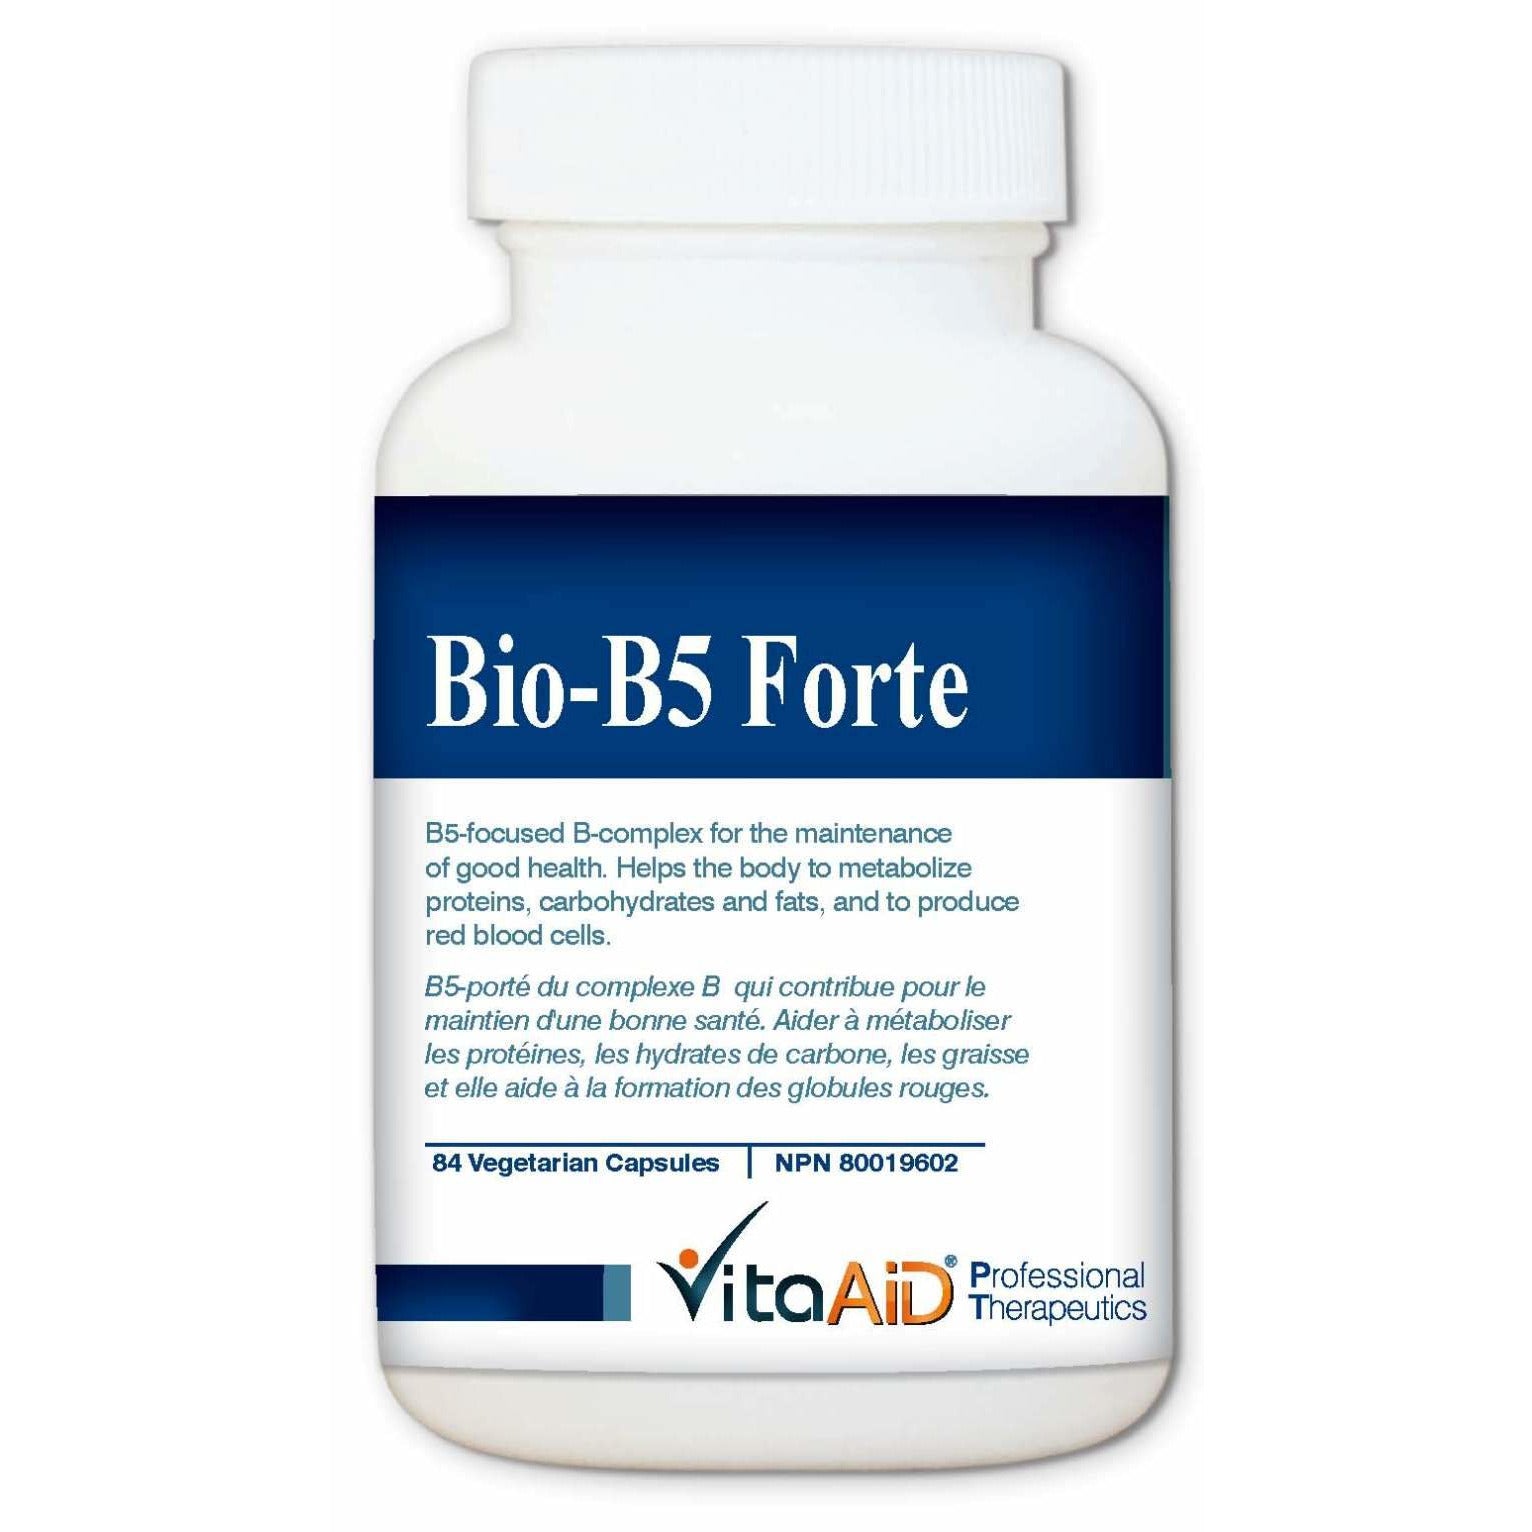 Bio-B5 Forte B5-Focused B-Complex to Restore Body's Metabolism and Support the Adrenals 84 veg caps - iwellnessbox